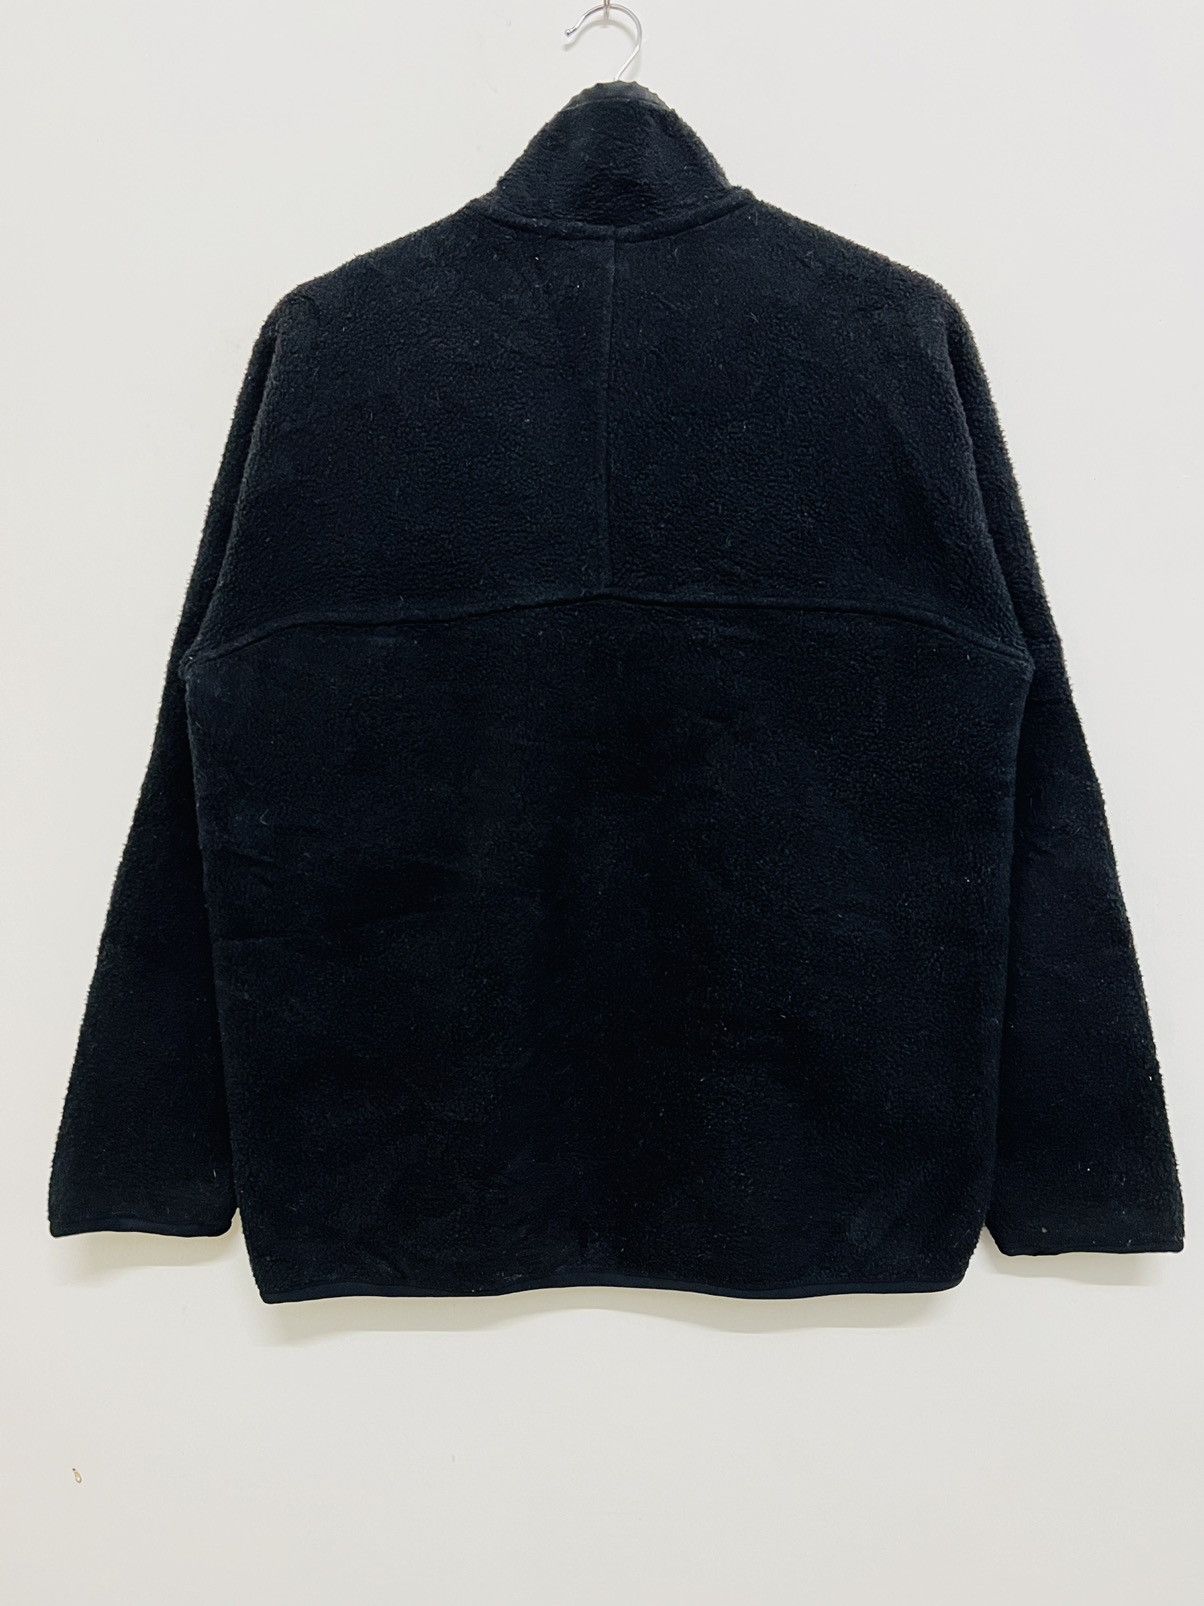 Patagonia Synchilla Full Zip Fleece Jacket - 12